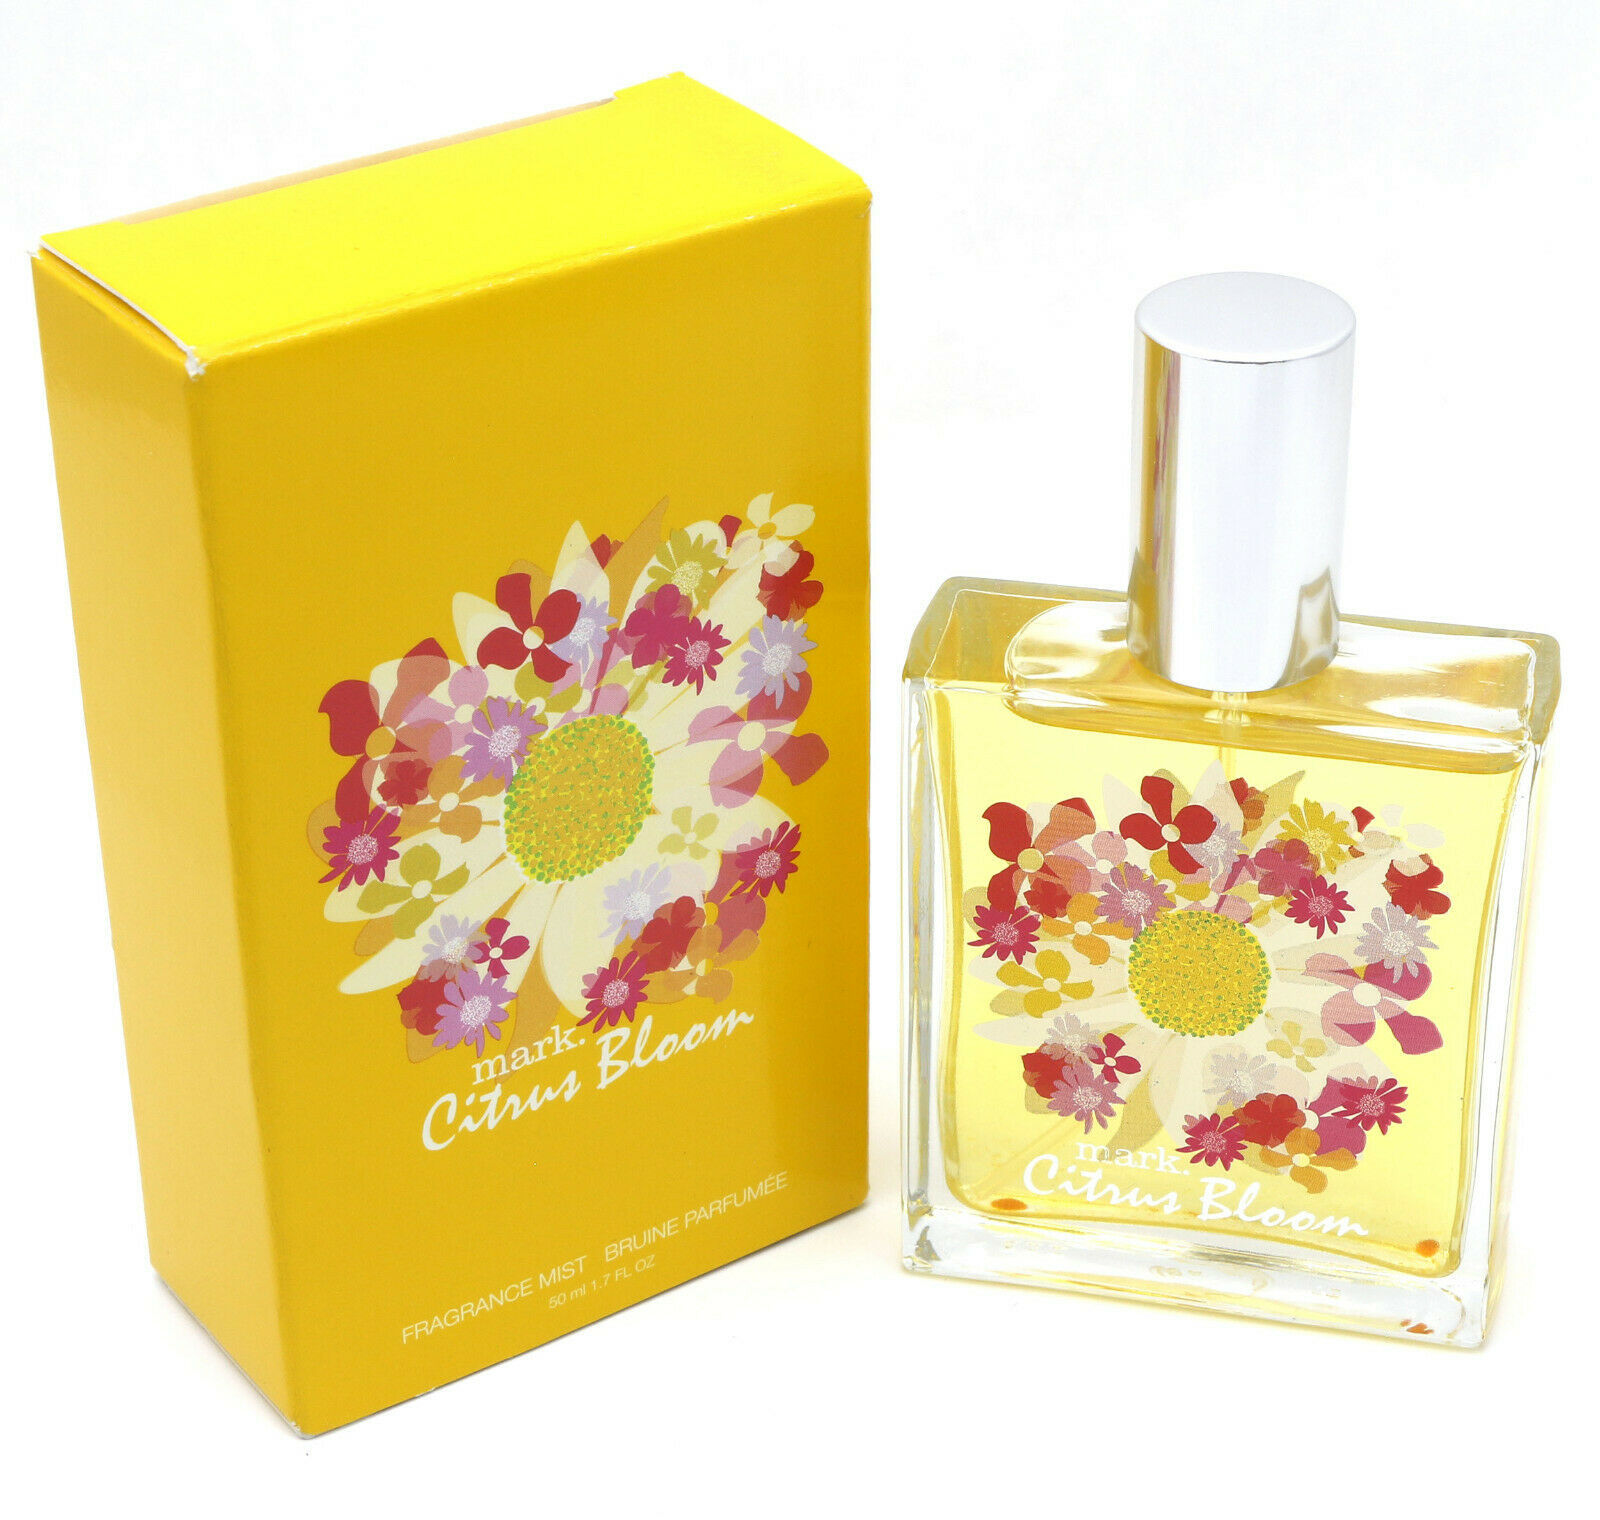 Avon Mark Citrus Bloom Fragrance Mist Spray and 50 similar items